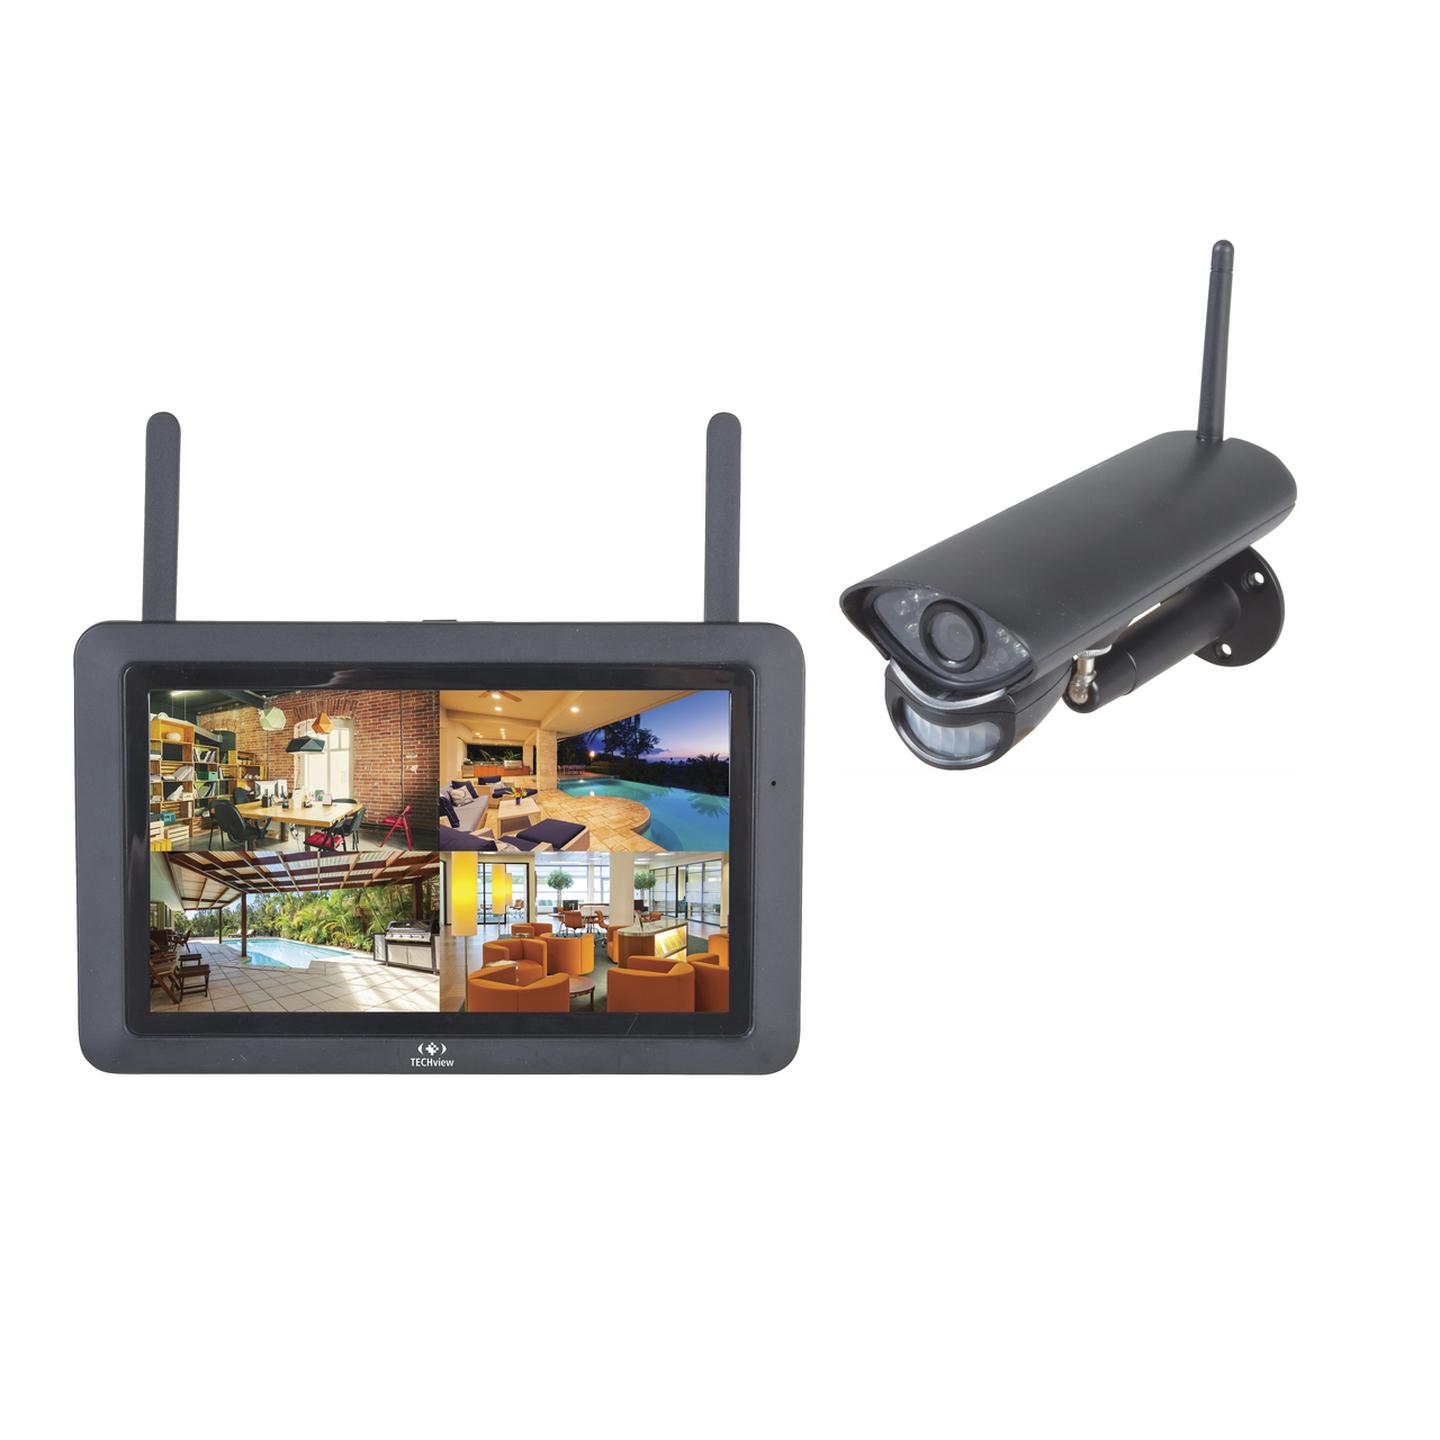 2.4GHz Wireless 720p Surveillance Kit with 7 LCD & 720p Wireless Camera